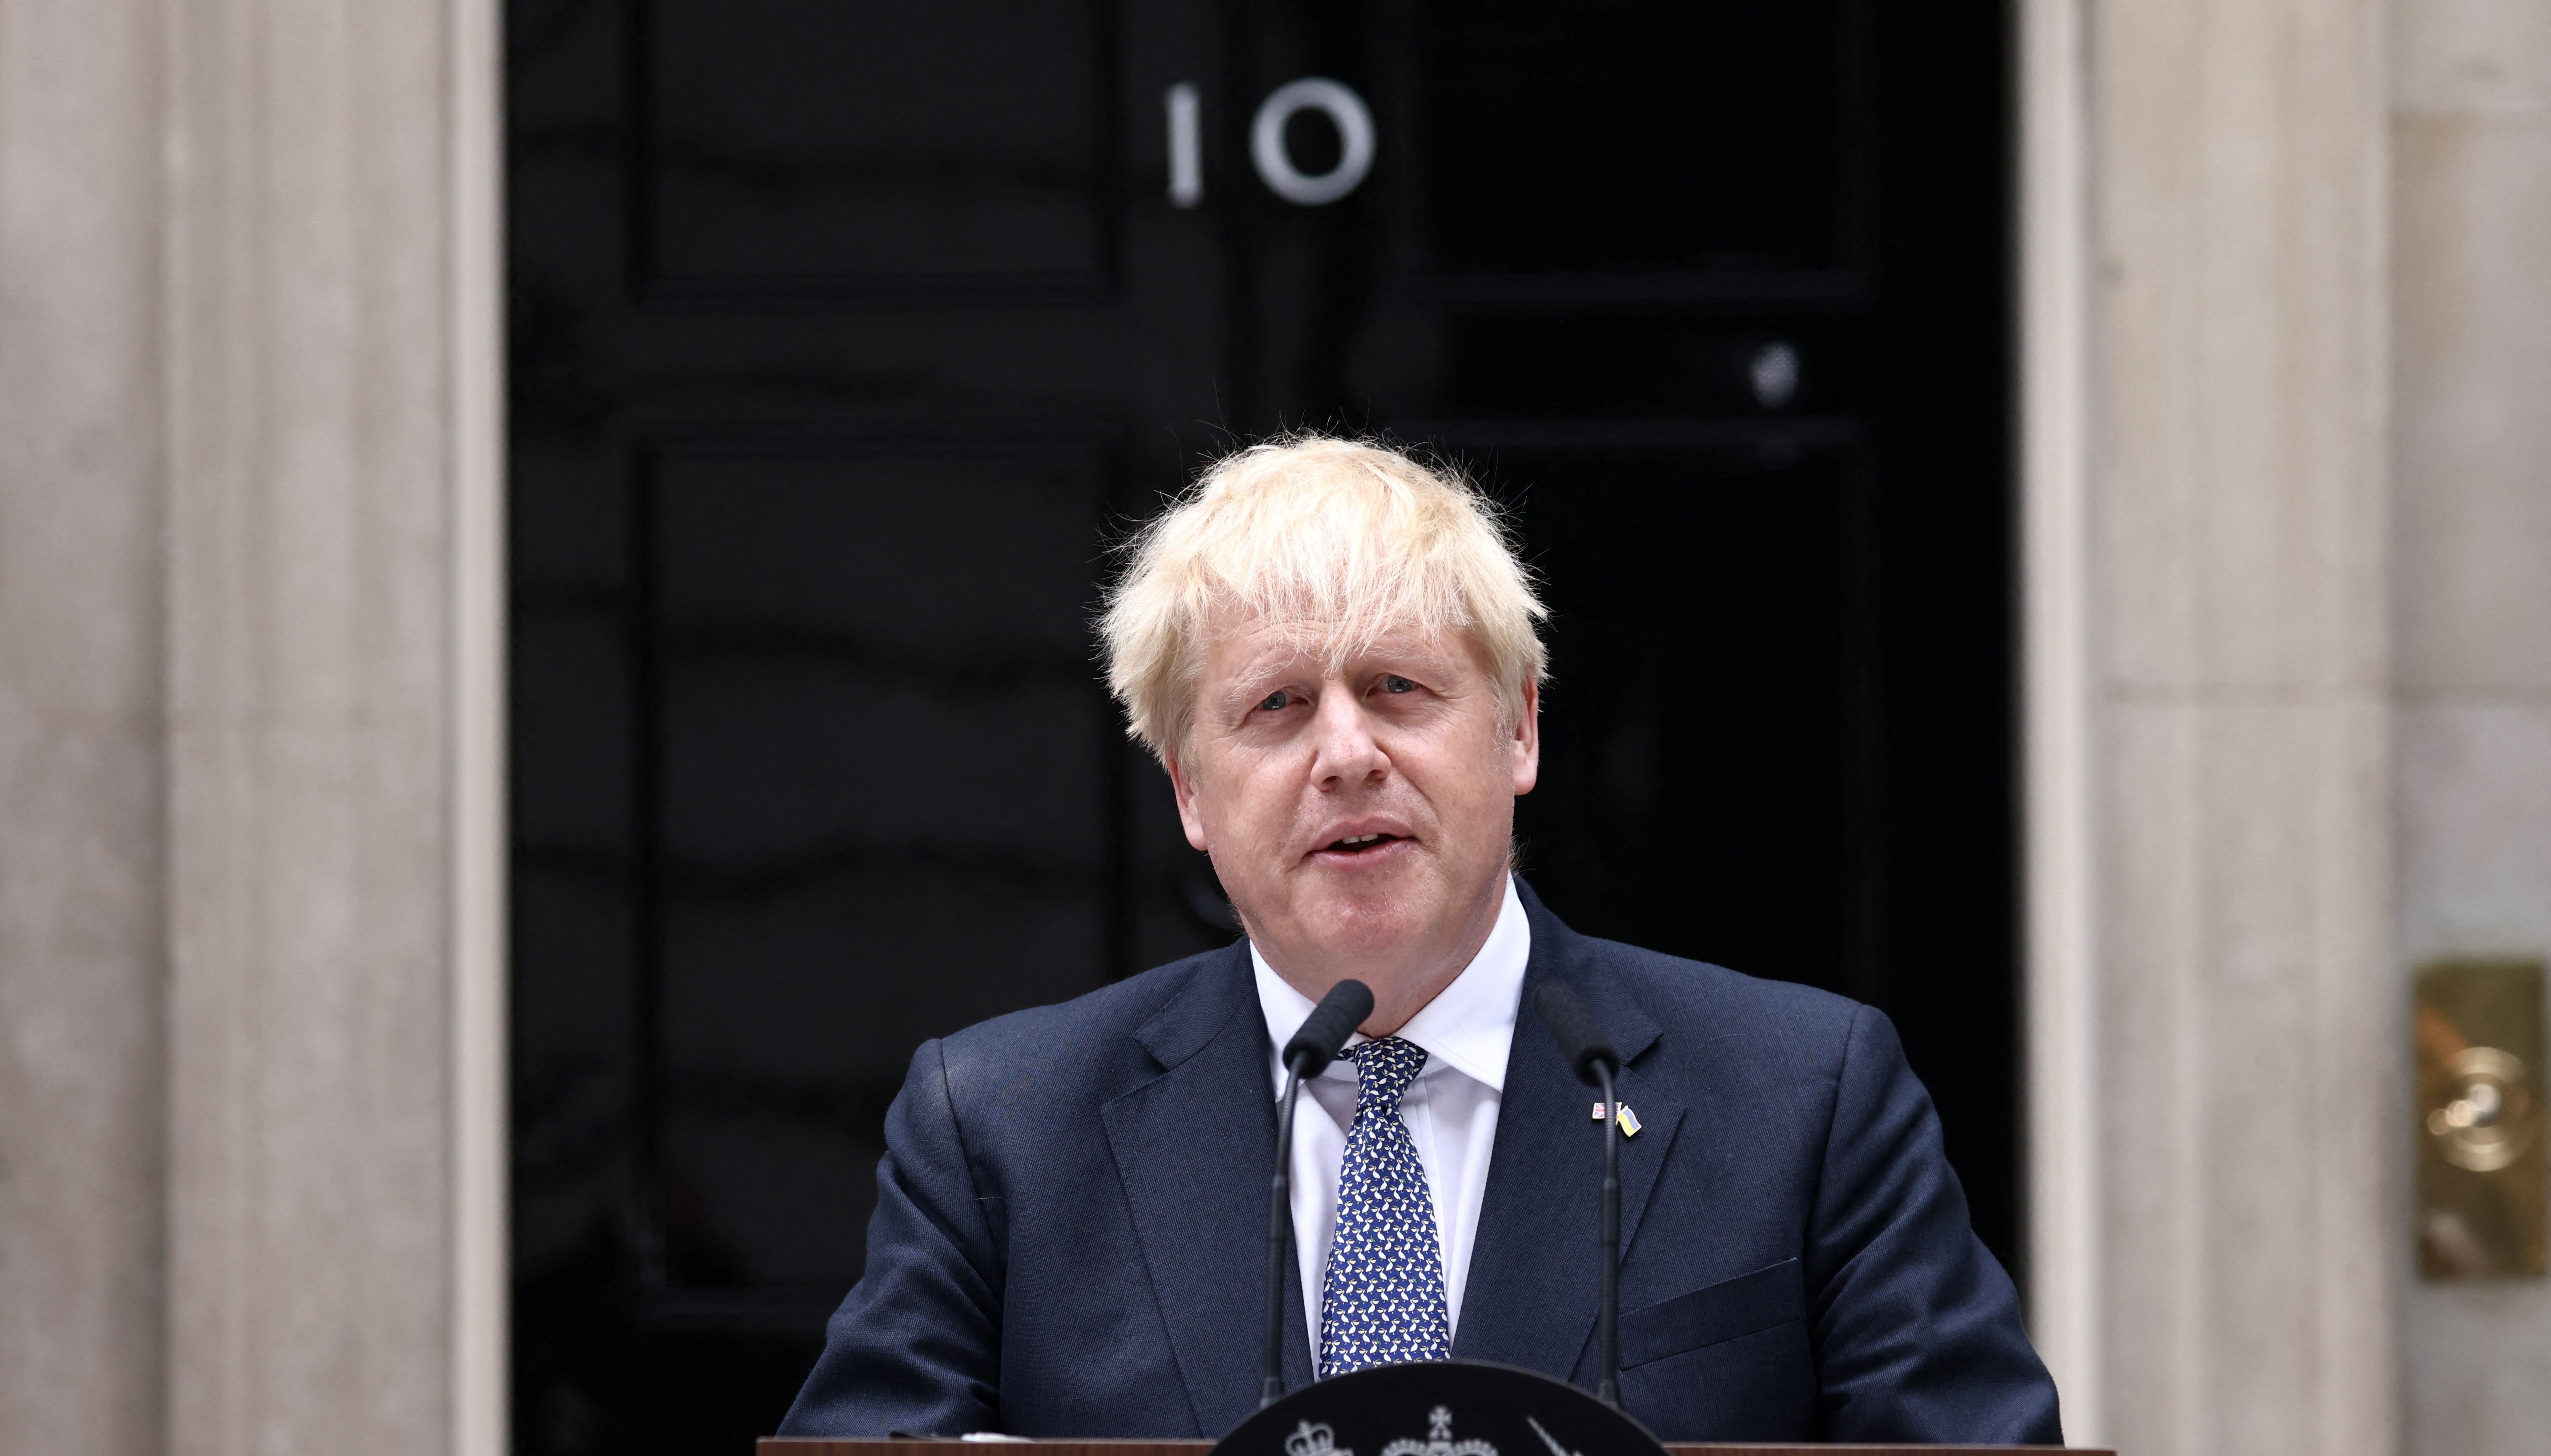 Boris Johnson resigned as PM last Thursday